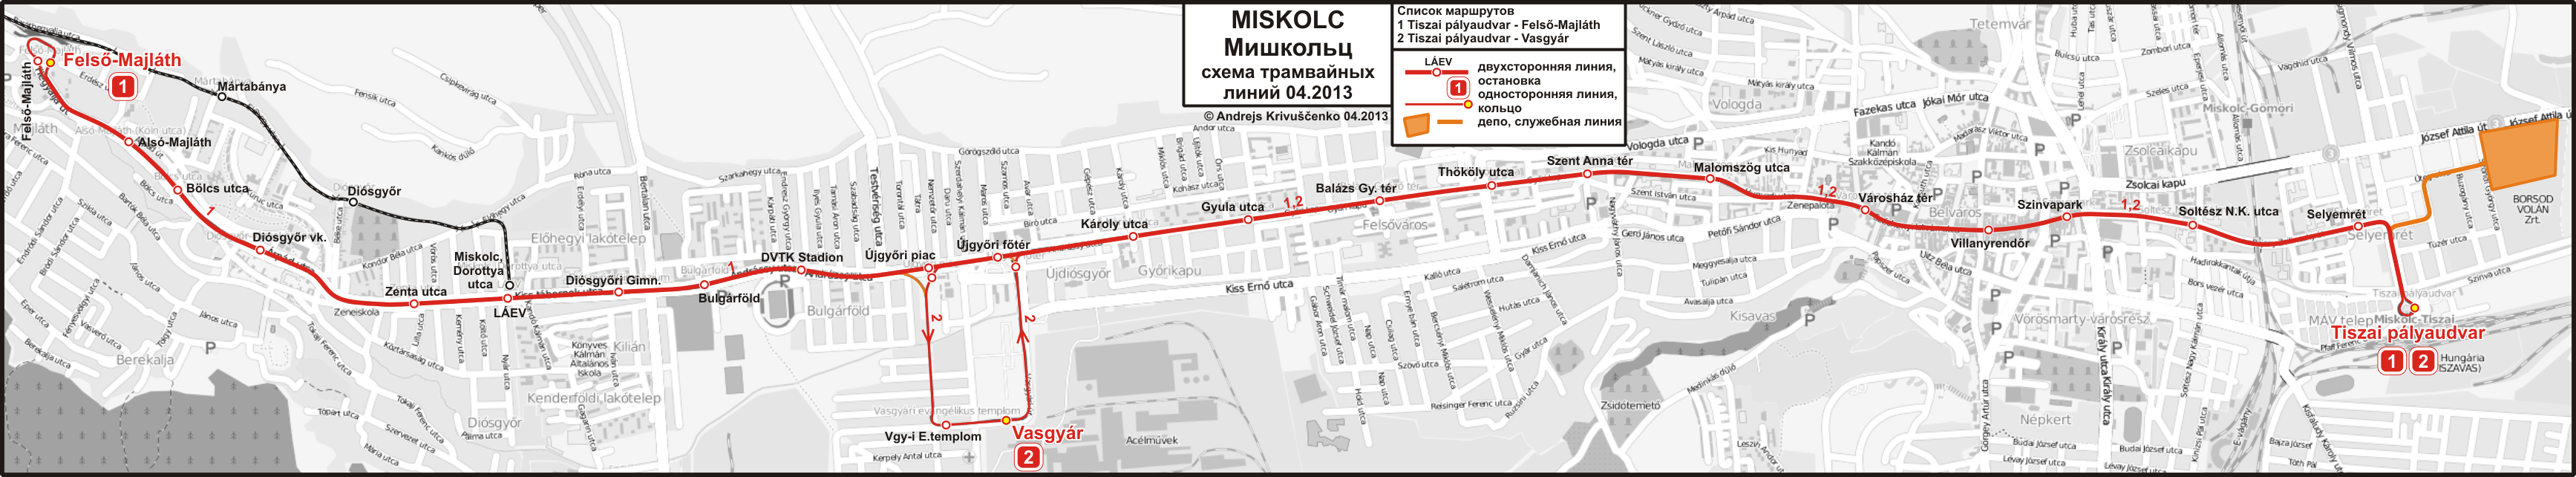 Miskolc — Maps